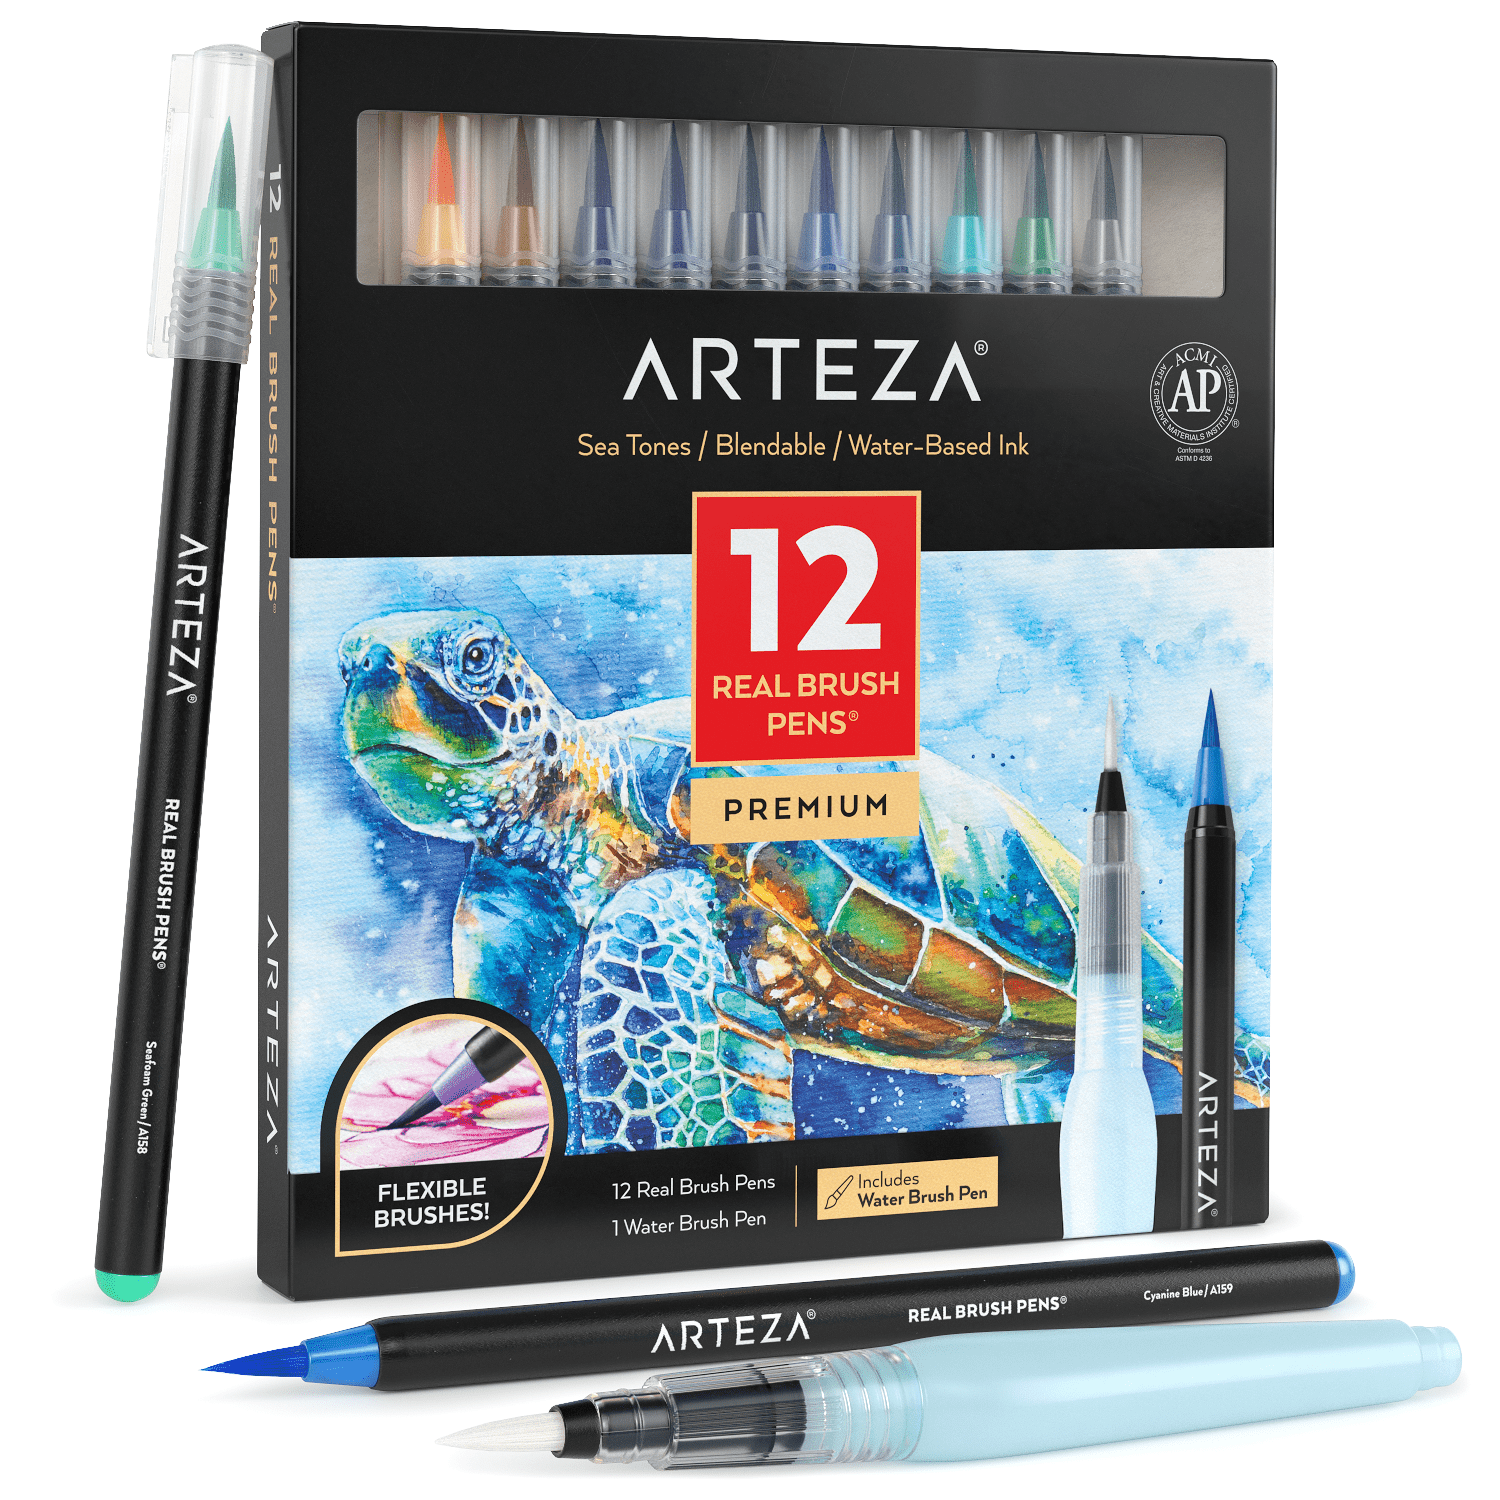 The Pencil Grip Kwik Stix Solid Tempera Paint Pens, Pastel Colors, Super  Quick Drying, 10 Pack - TPG-680 